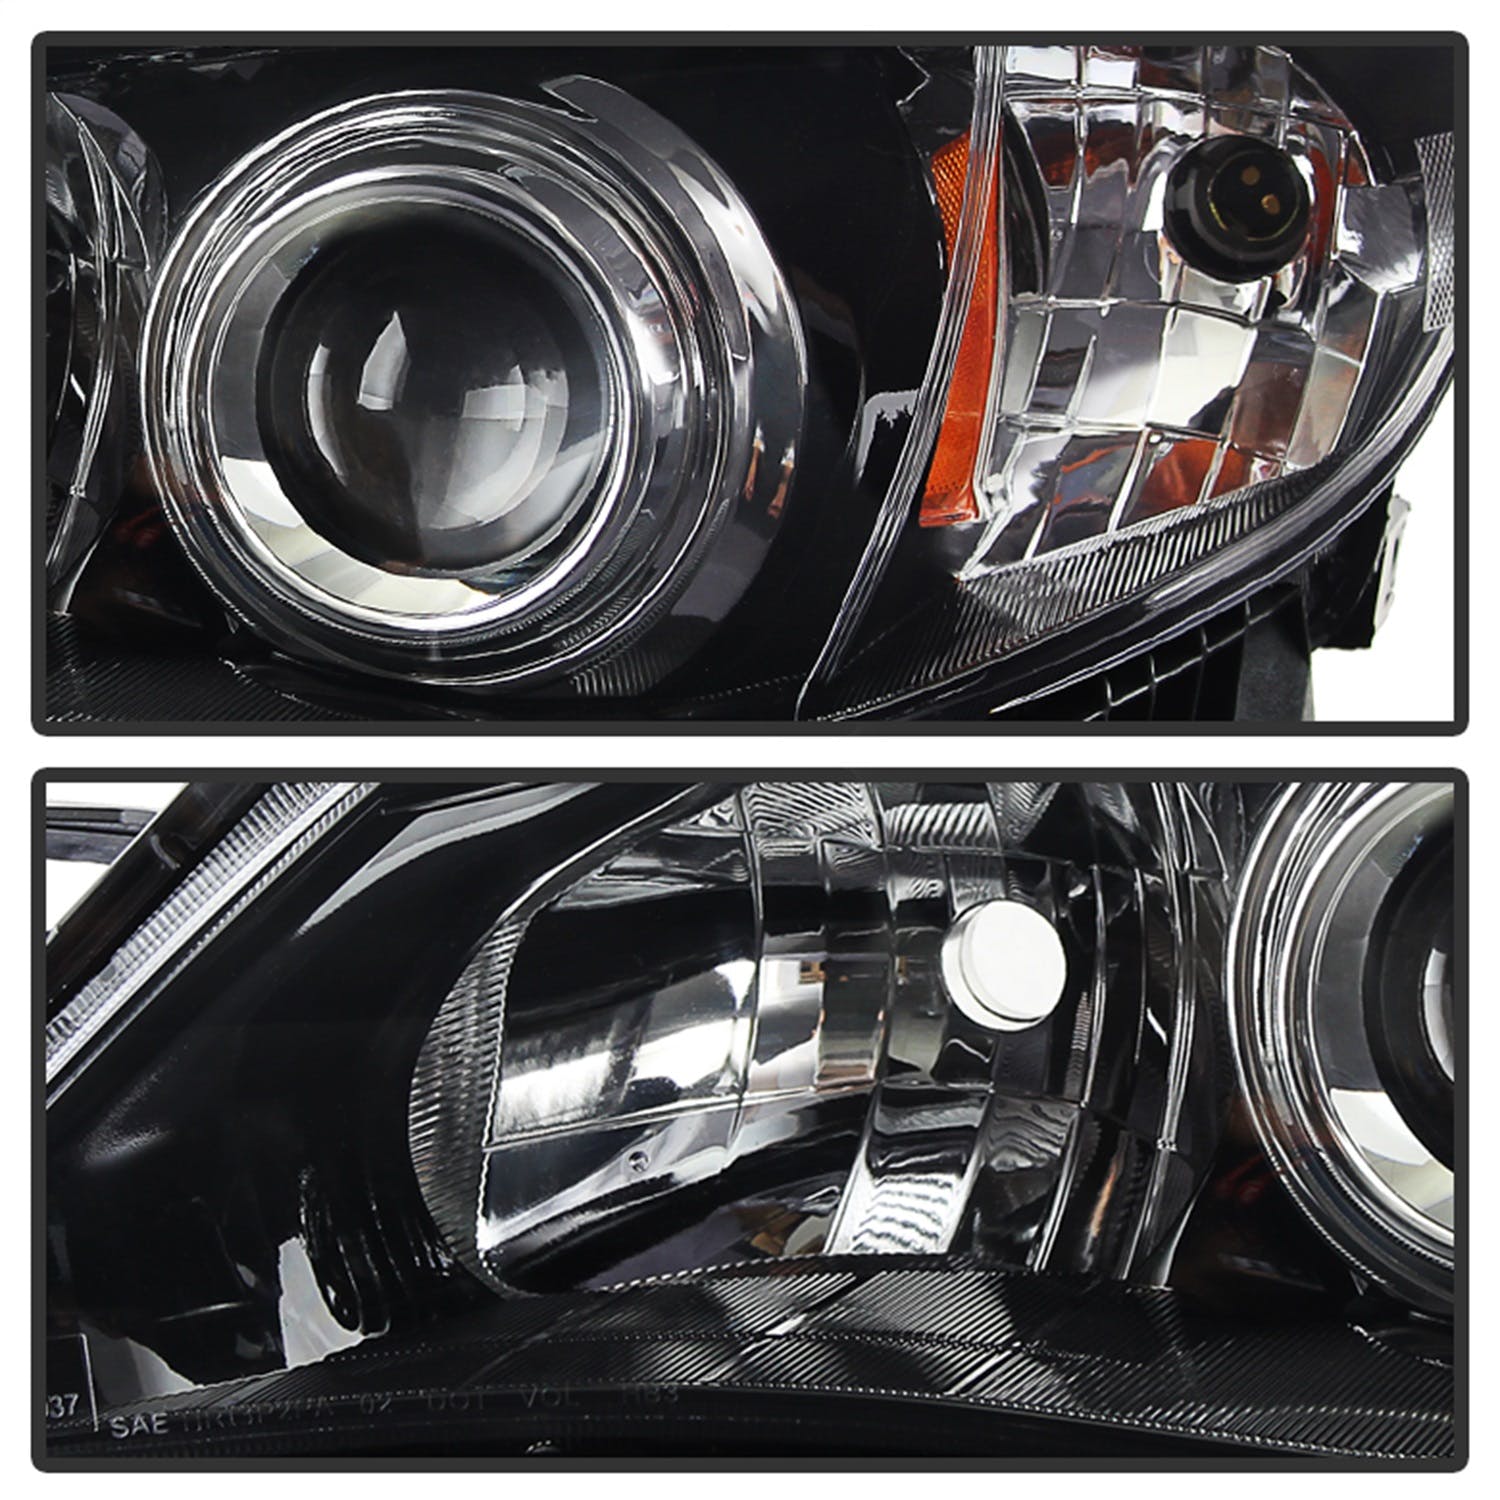 XTUNE POWER 9028281 Subaru Impreza WRX 08 14 Outback Sport 08 11 Halogen Models Only (Bulbs Not Included) Headlights Black